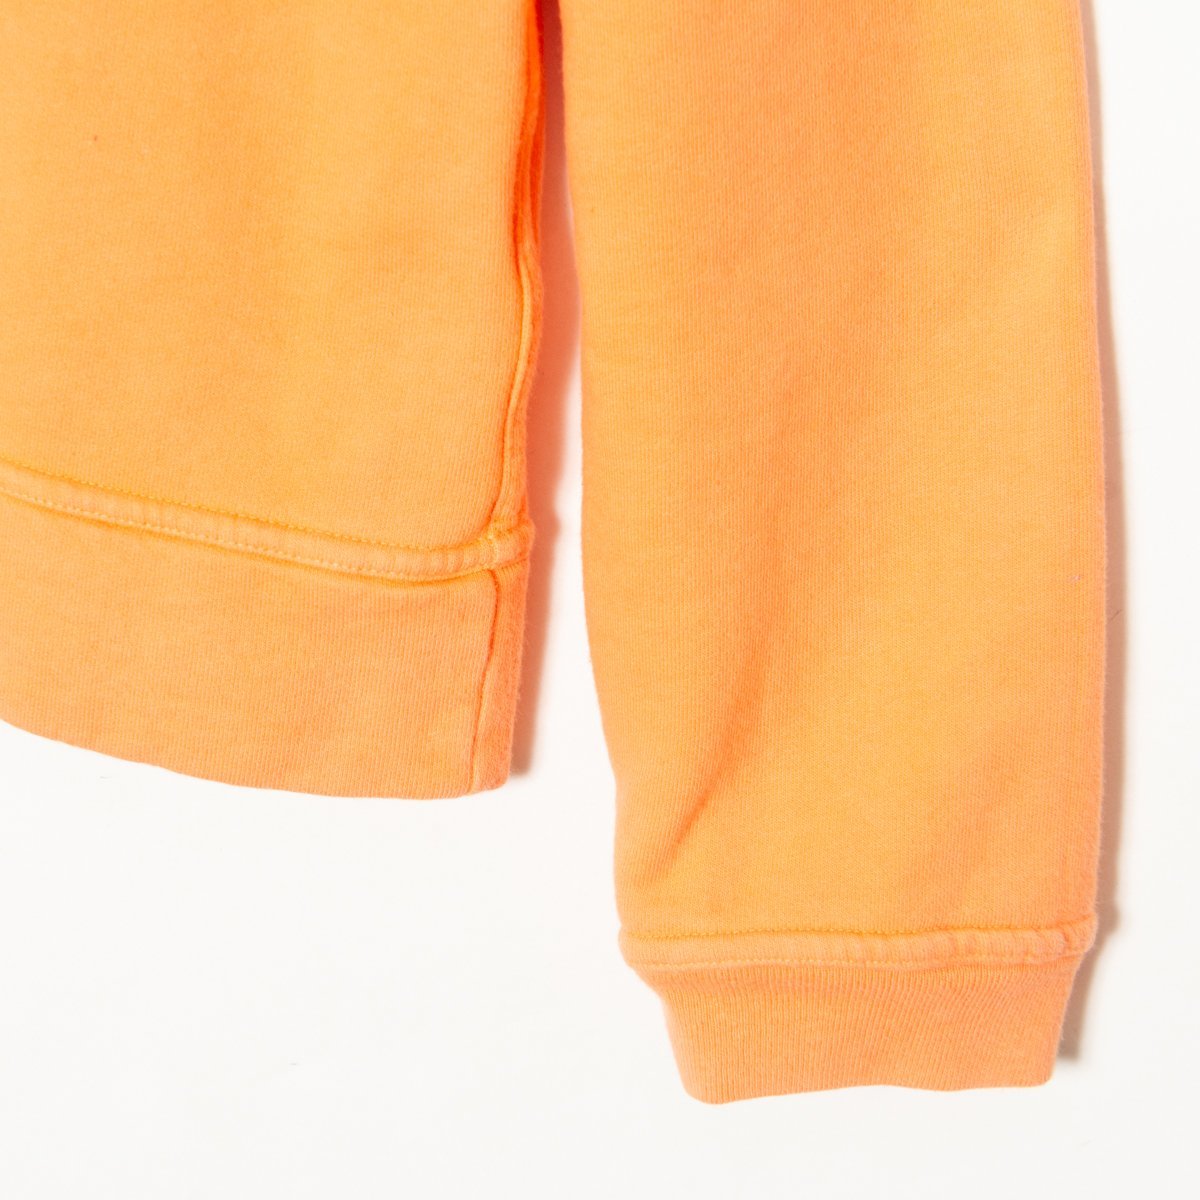 CHUMS チャムス ハーフボタン トレーナー トップス カットソー L USA製 オレンジ 橙 メンズ 紳士 男性 アウトドア カジュアル 古着_画像4